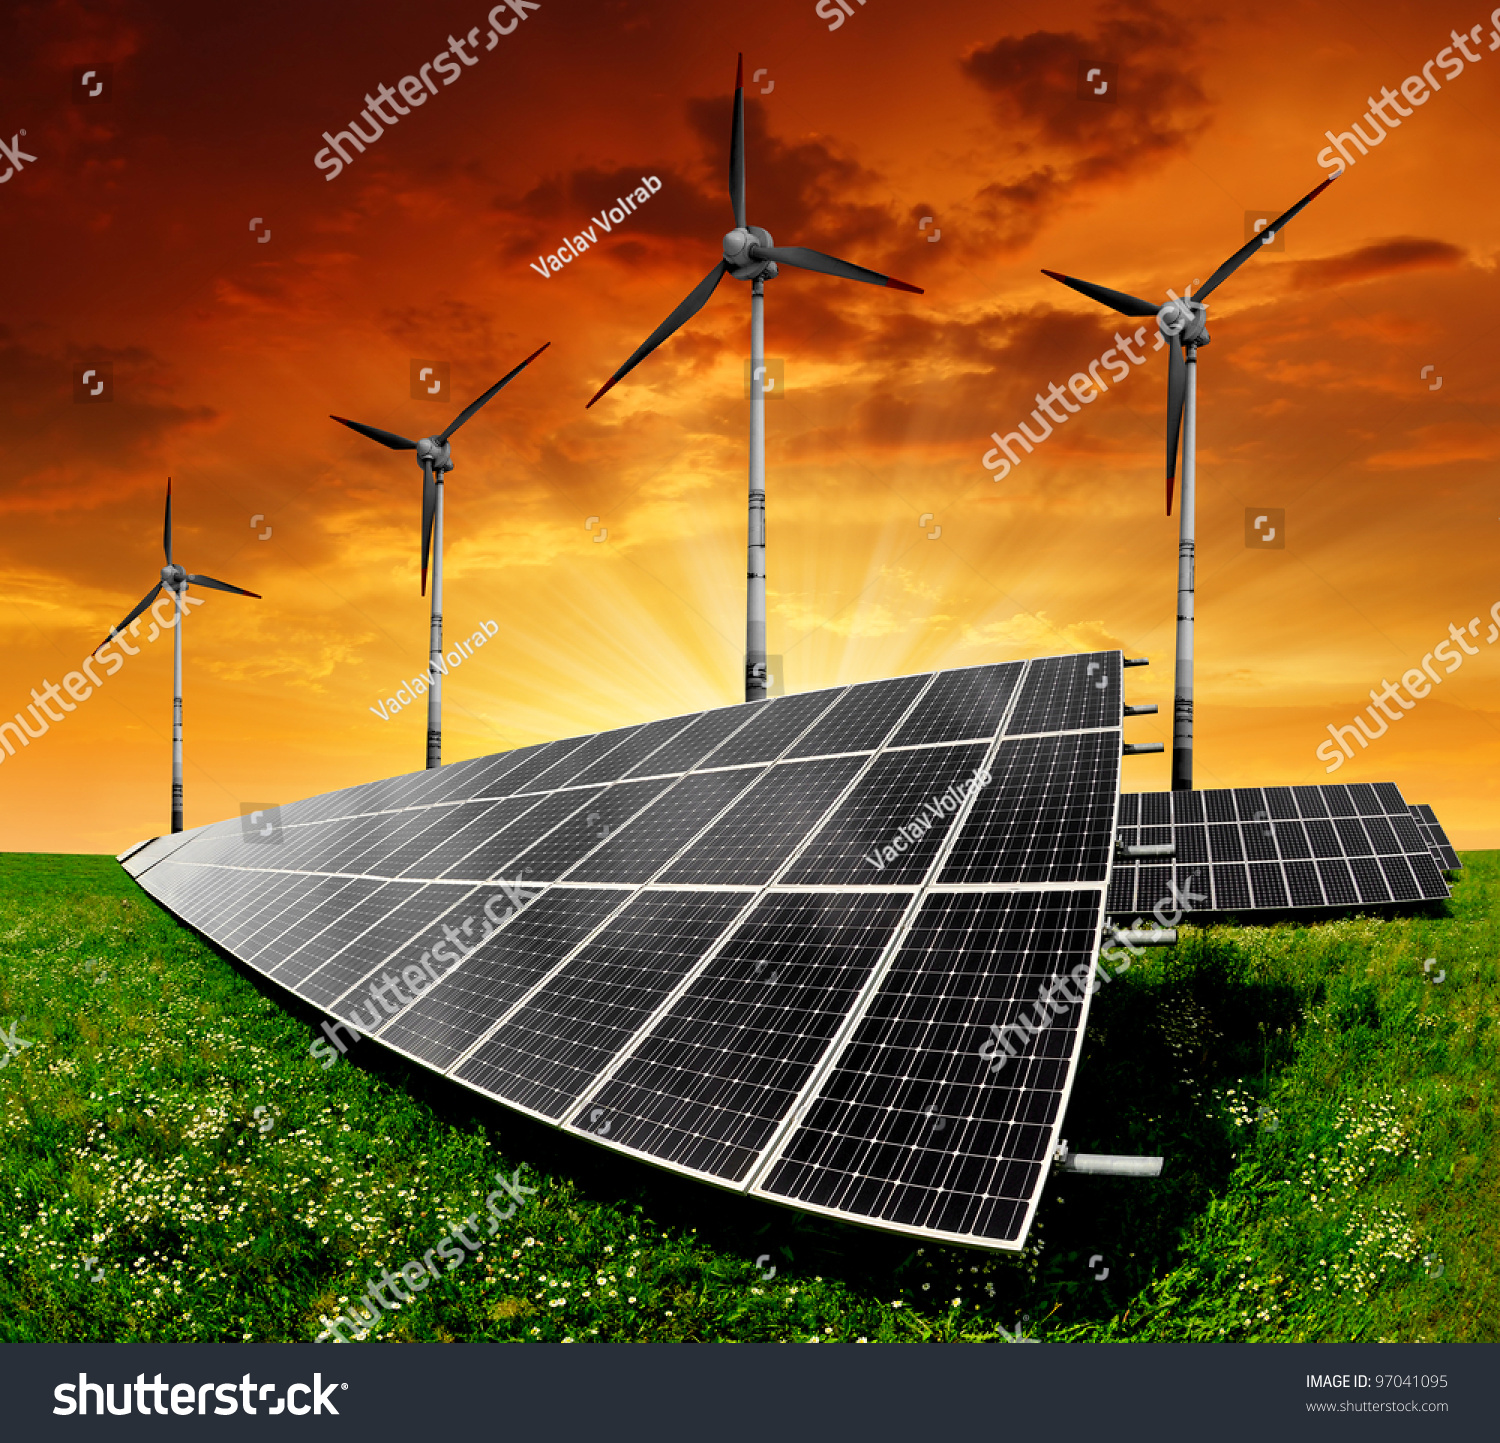 powerpoint-template-solar-energy-renewable-panels-uohlihum